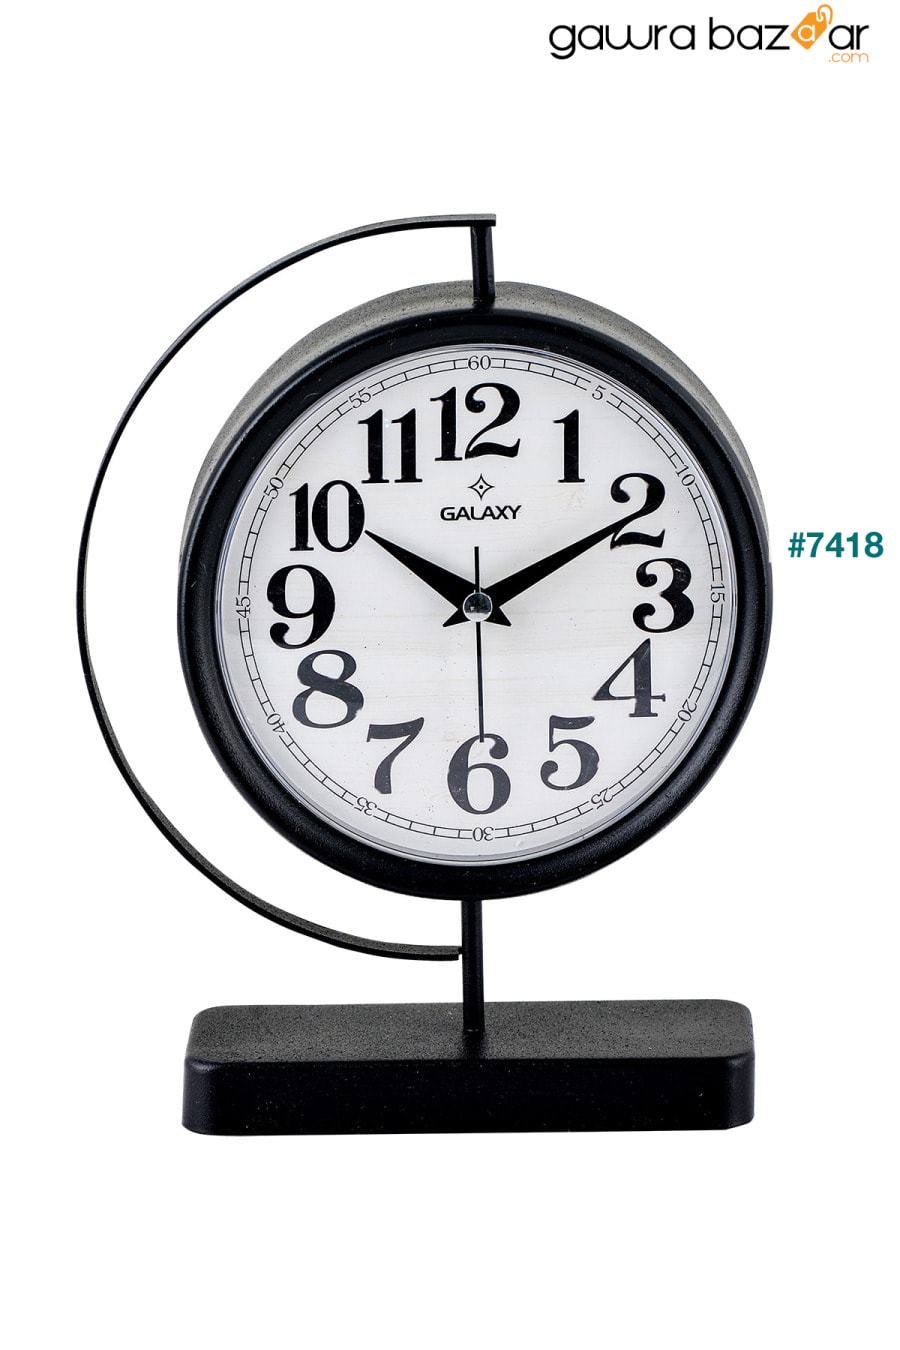 Muyika Maniera ساعة مكتب معدنية مزخرفة آلية صامتة أسود mms Muyika Design 2